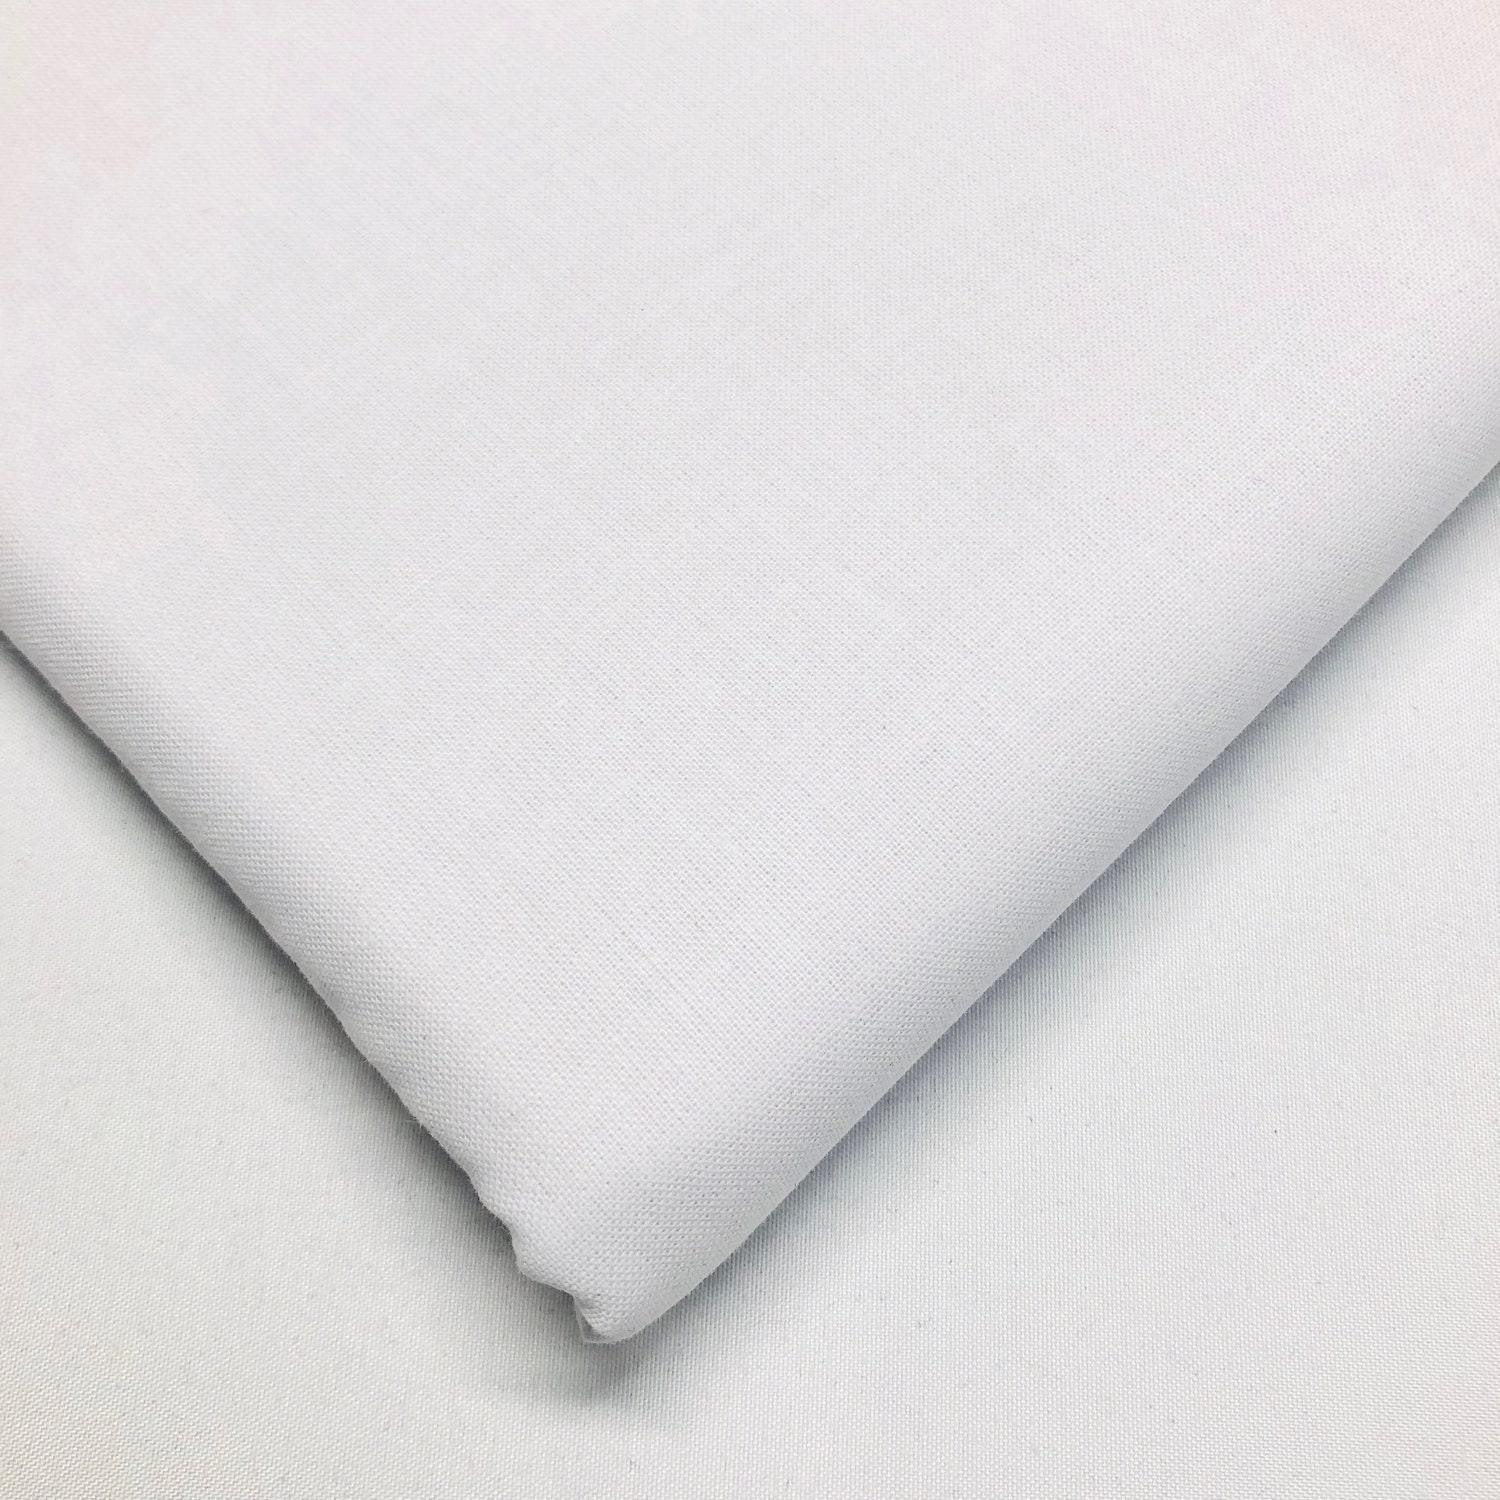 100% Cotton Fabric Material By The Metre, Plain Colours, Fat Quarters - 60  Wide